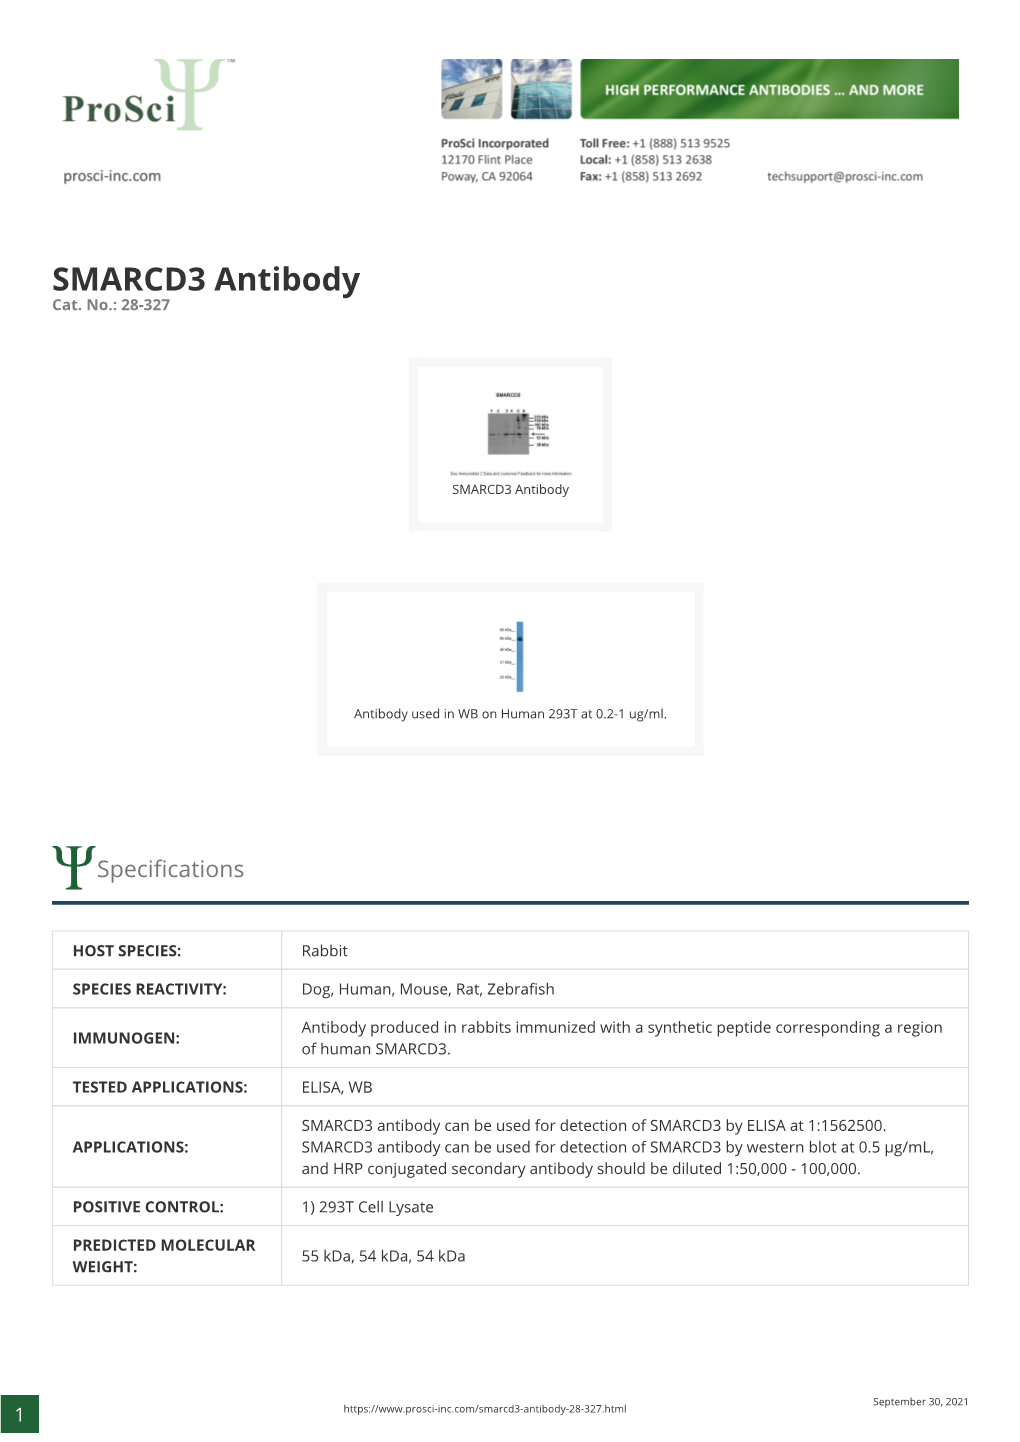 SMARCD3 Antibody Cat